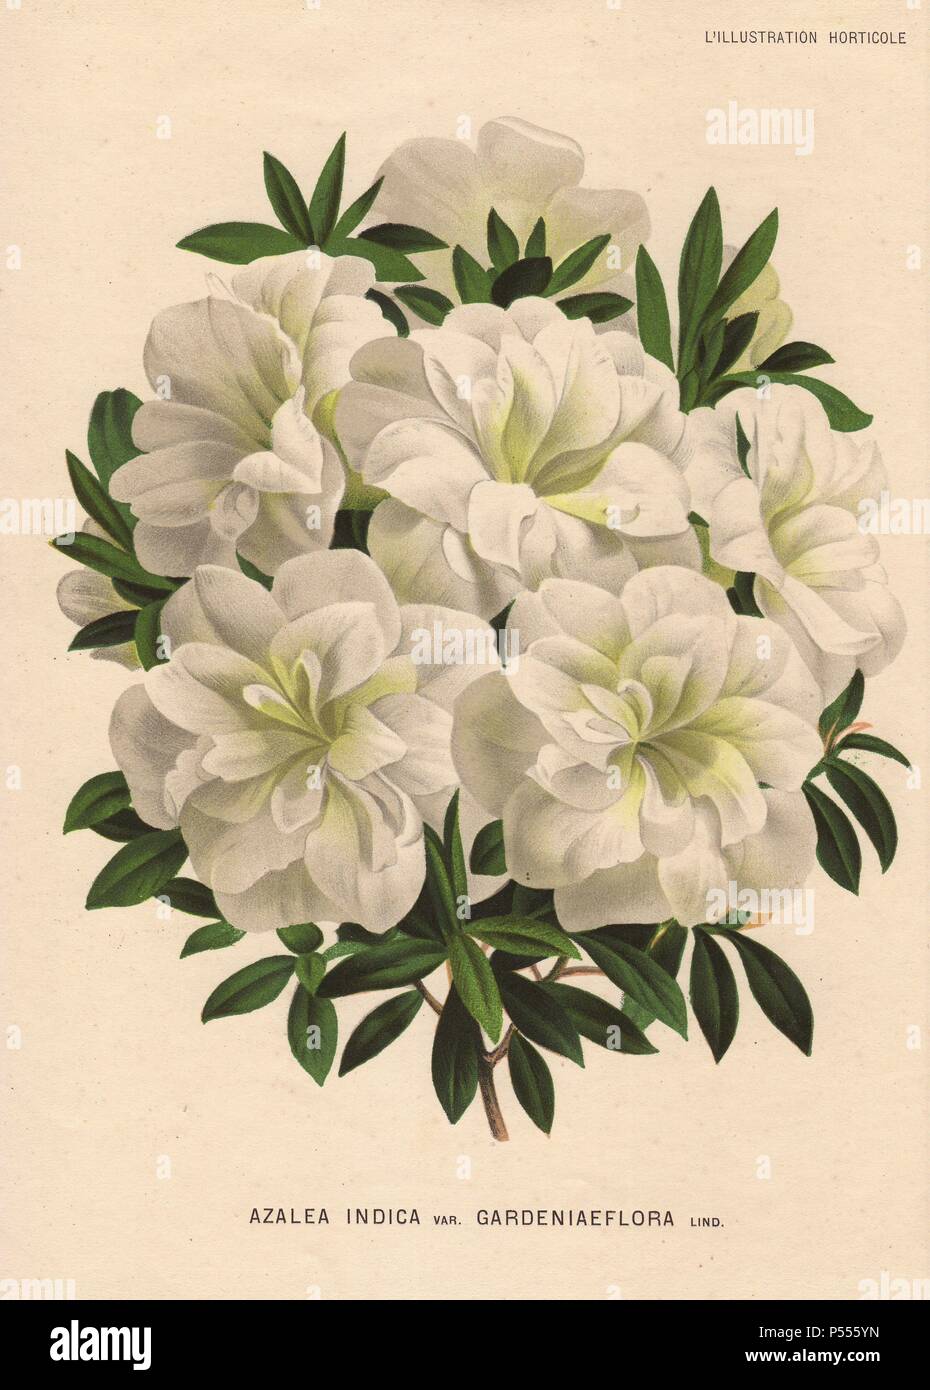 White azalea. Azalea indica var. gardeniaeflora Lind.. Chromolithographed illustration from Jean Linden's 'L'Illustration Horticole' 1882. Stock Photo